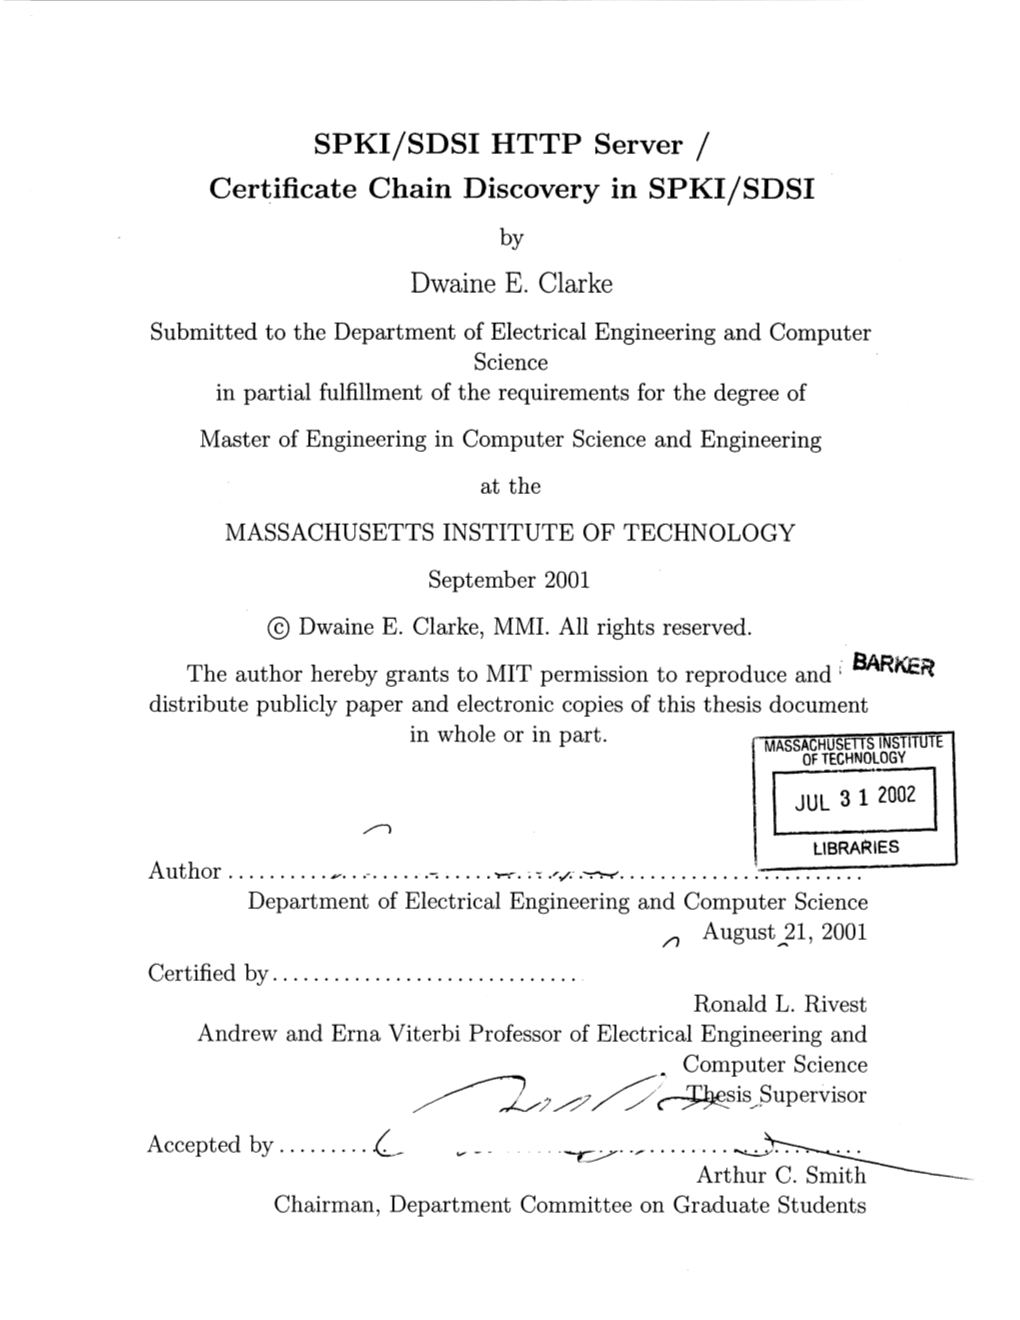 SPKI/SDSI HTTP Server / Certificate Chain Discovery in SPKI/SDSI Dwaine E. Clarke